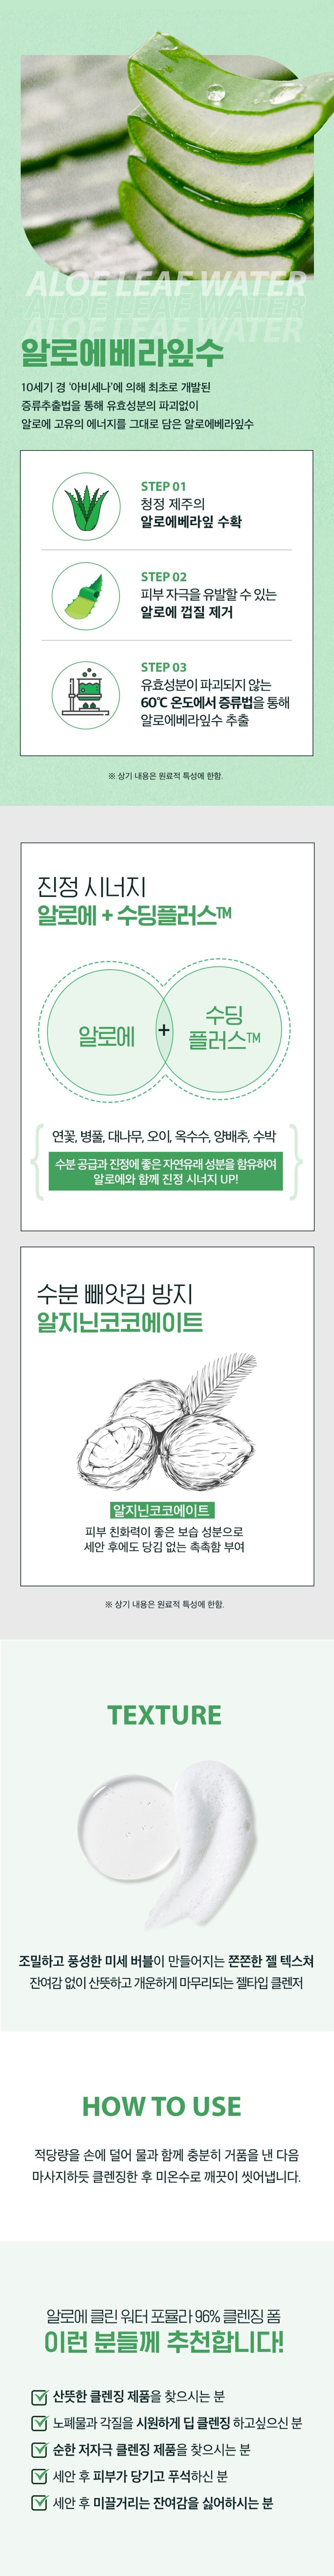 Holika Holika Aloe Clean Water Formula 96% Cleansing Foam korean skincare product online shop malaysia finland italy5